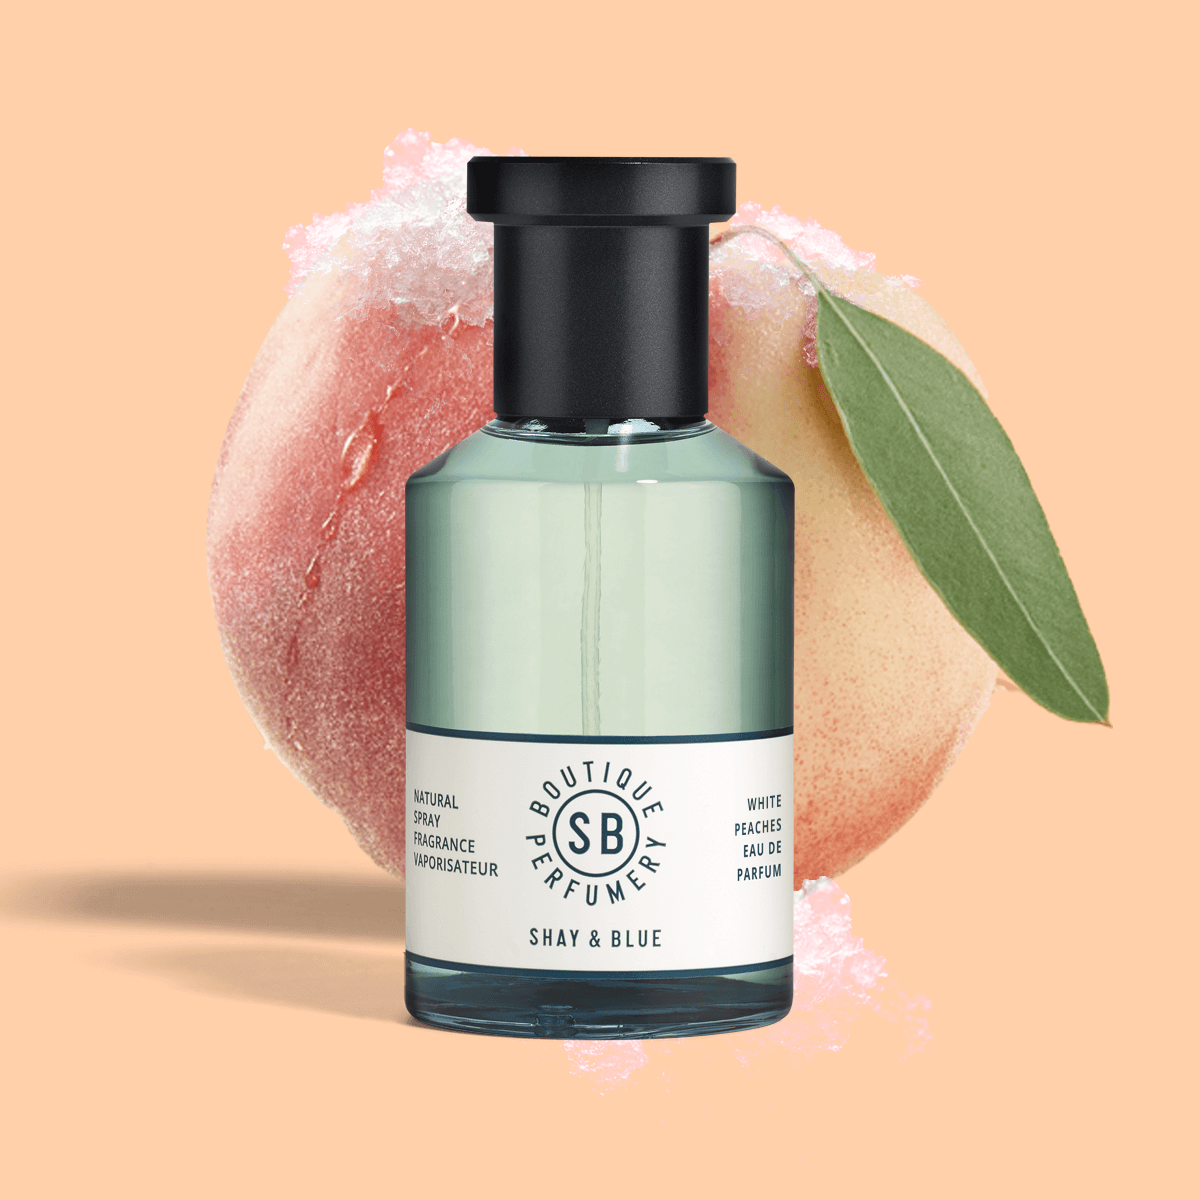 White Peaches Fragrance 100ml | Delicate peach, elderflower granita and silver birch. | Clean All Gender Fragrance | Shay & Blue